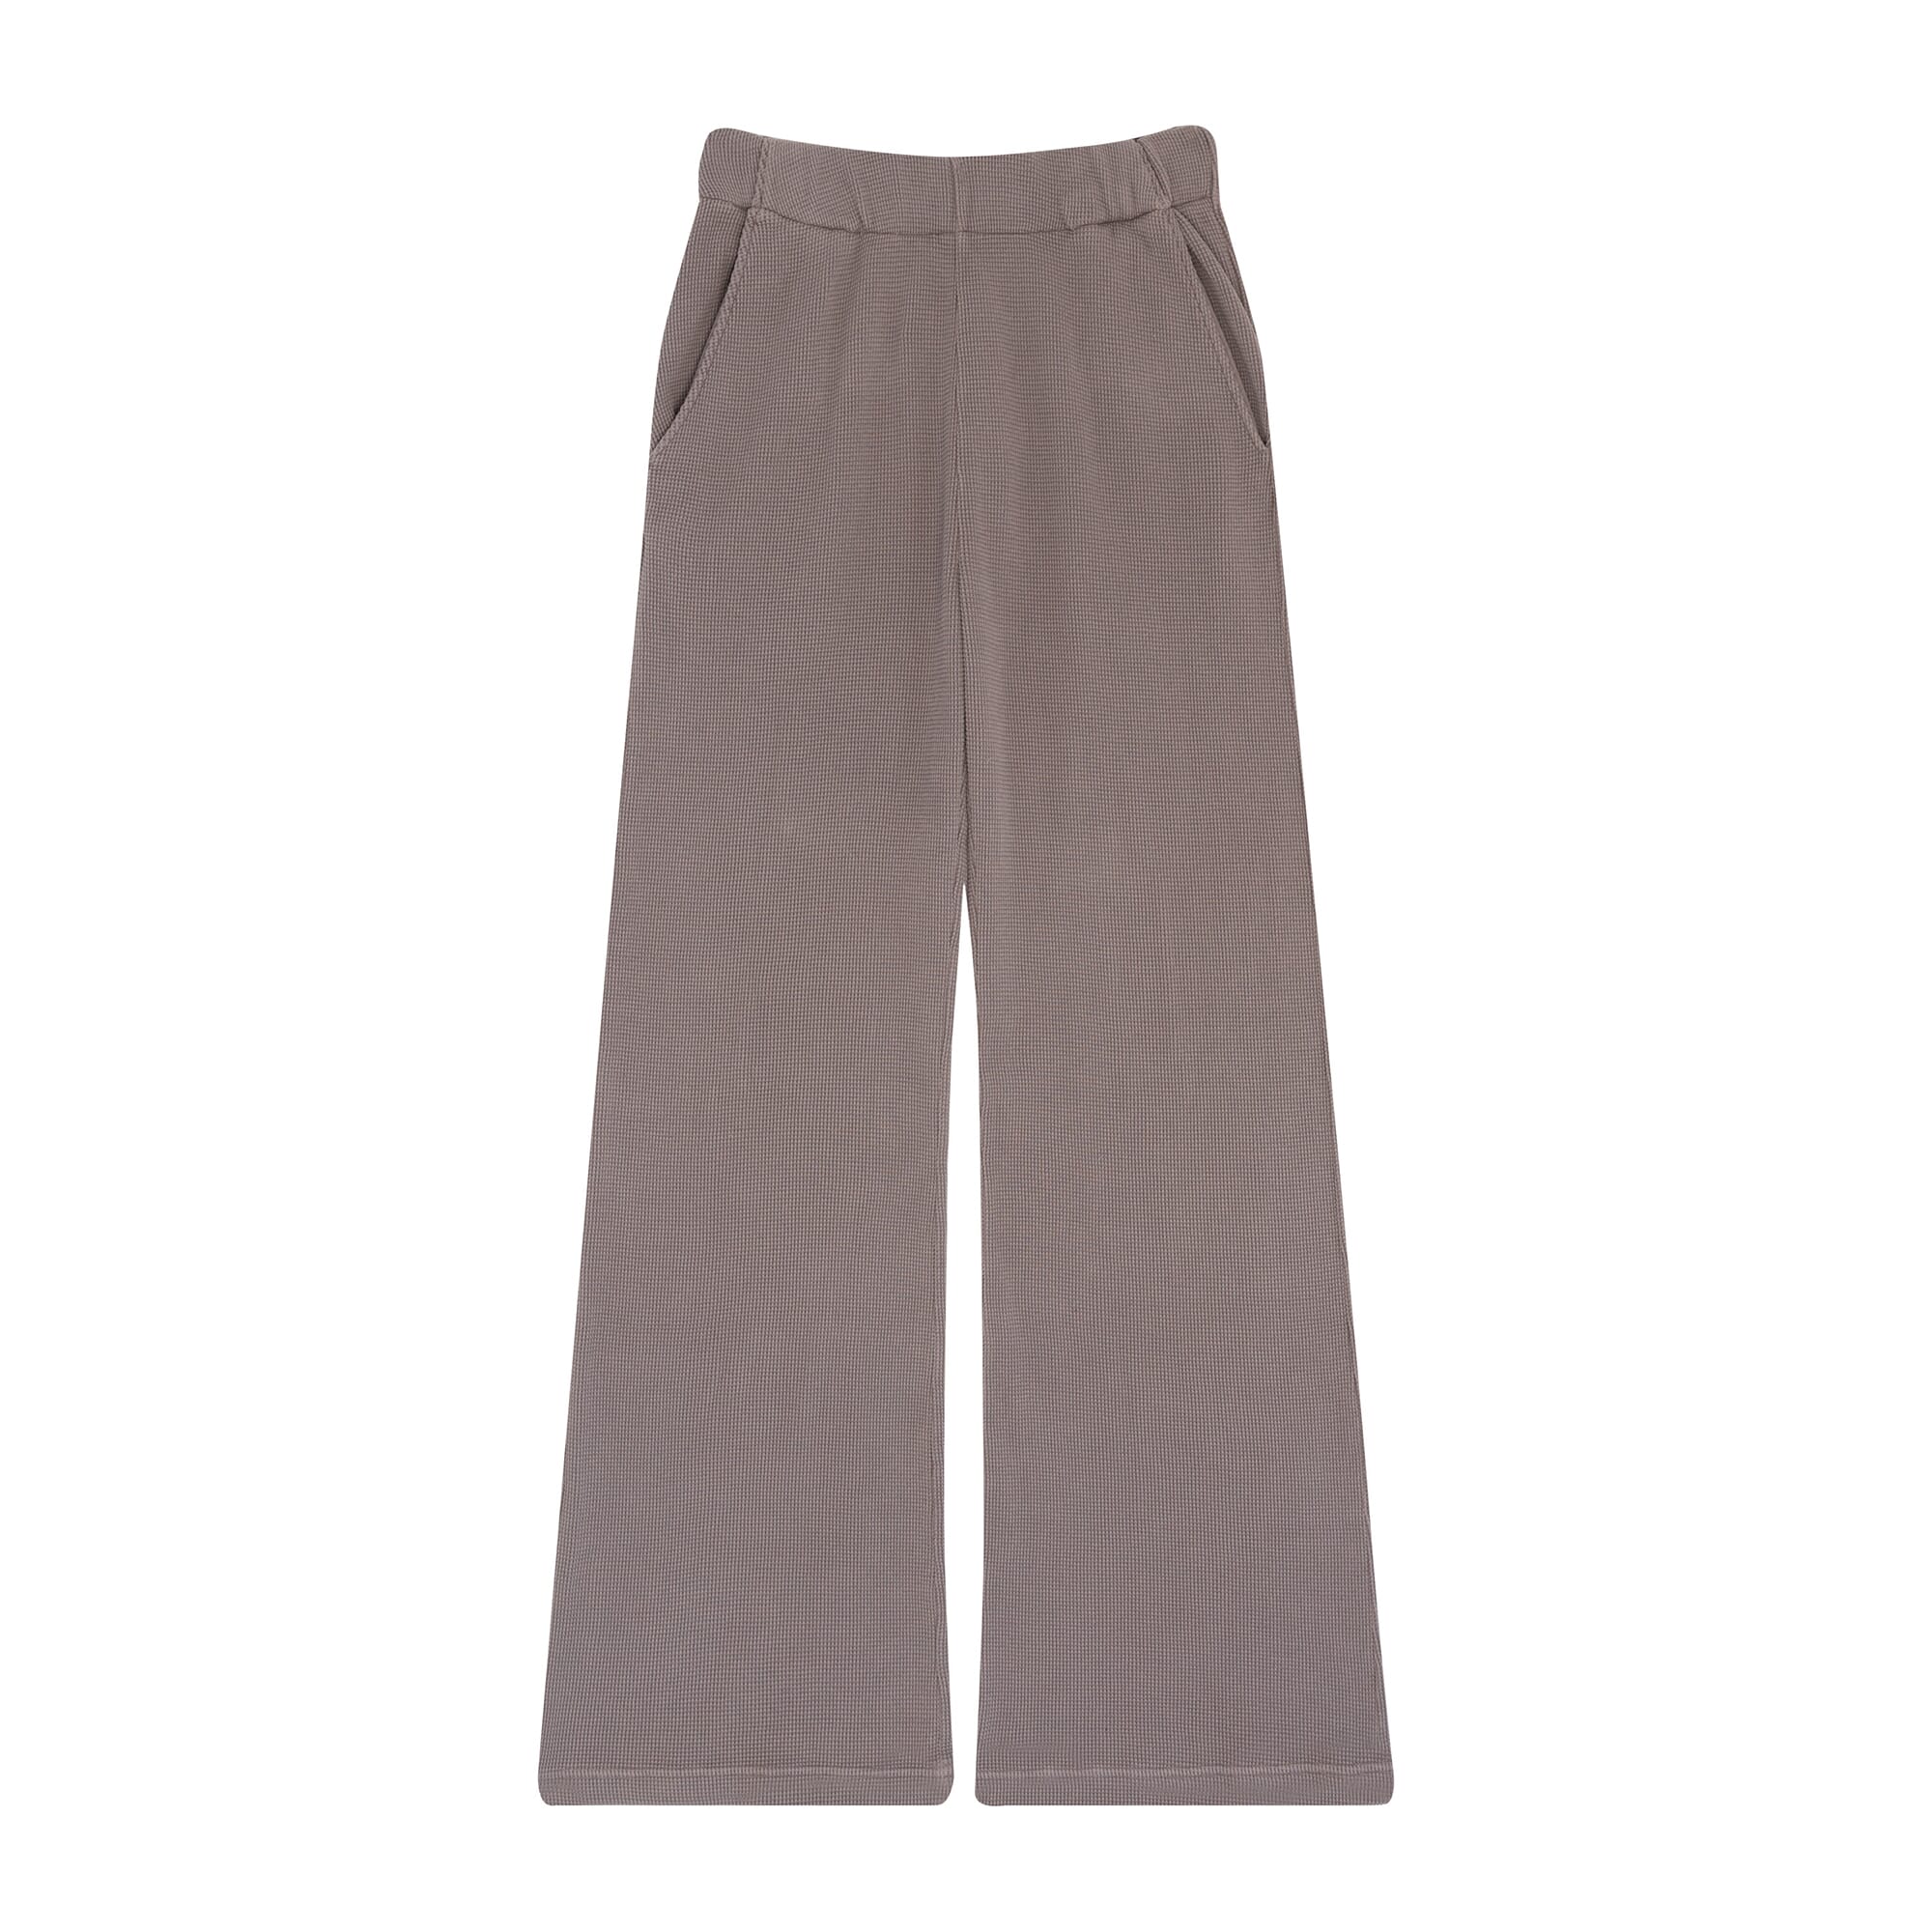 Pyjama bottoms - Beige marl - Ladies | H&M IN